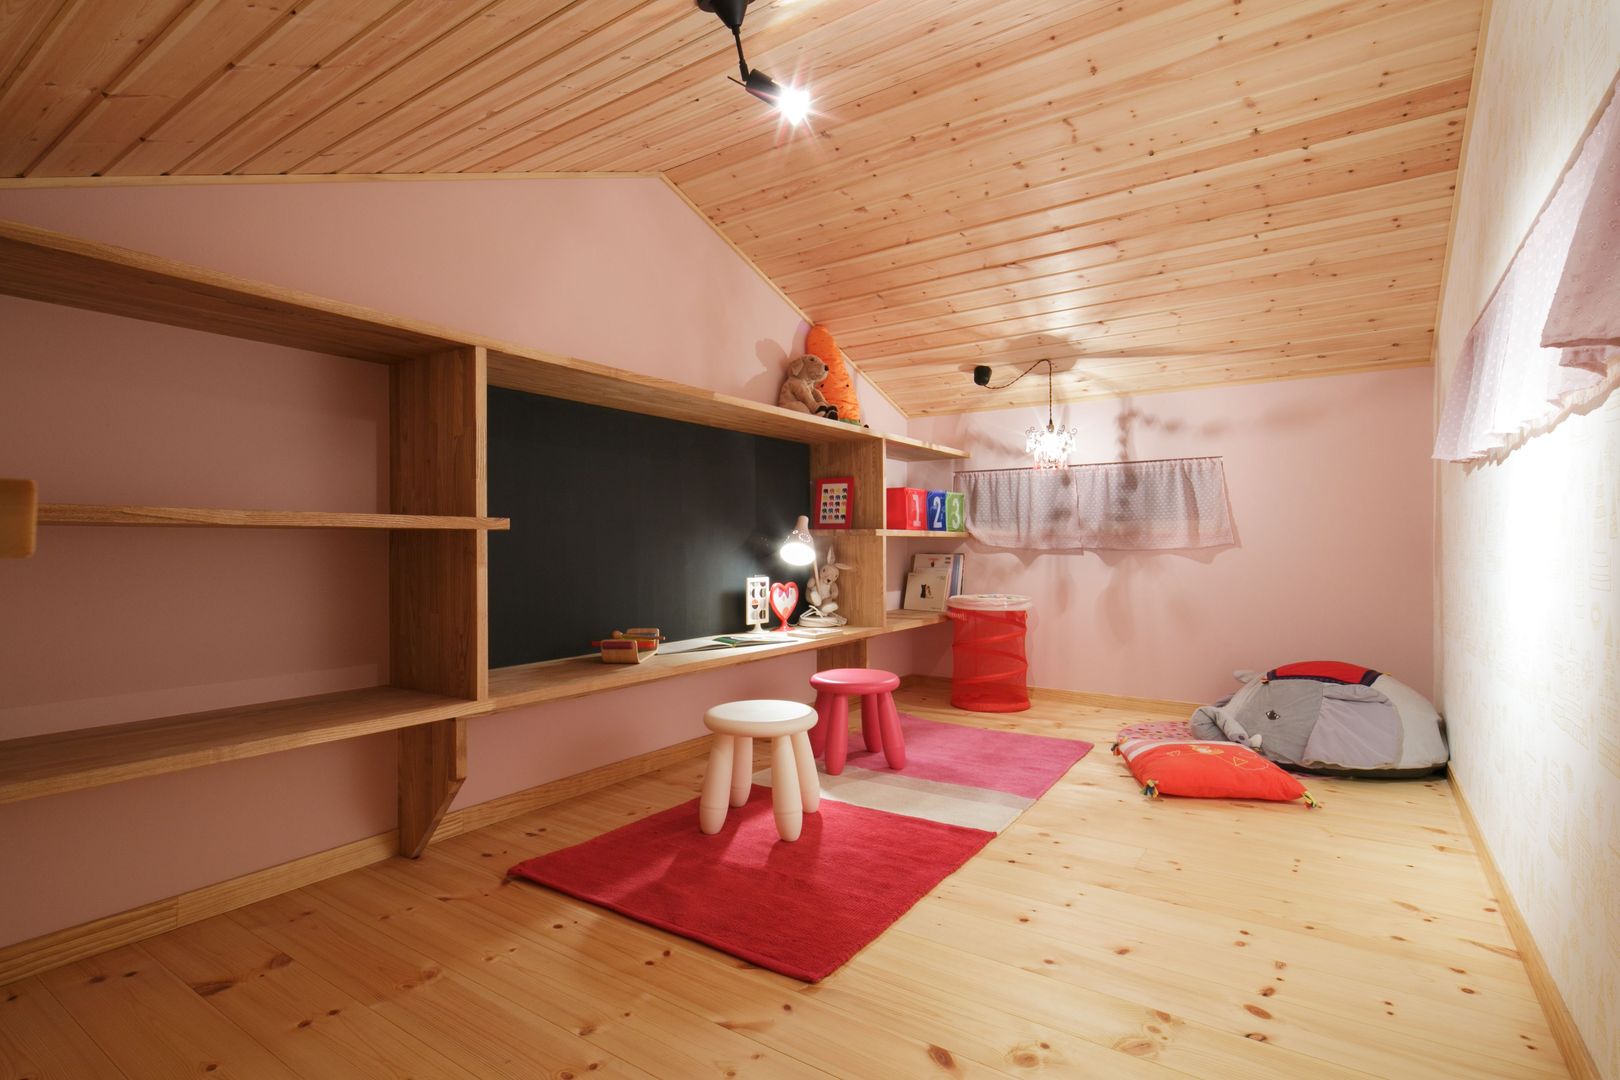 H's HOUSE, dwarf dwarf Nursery/kid’s room